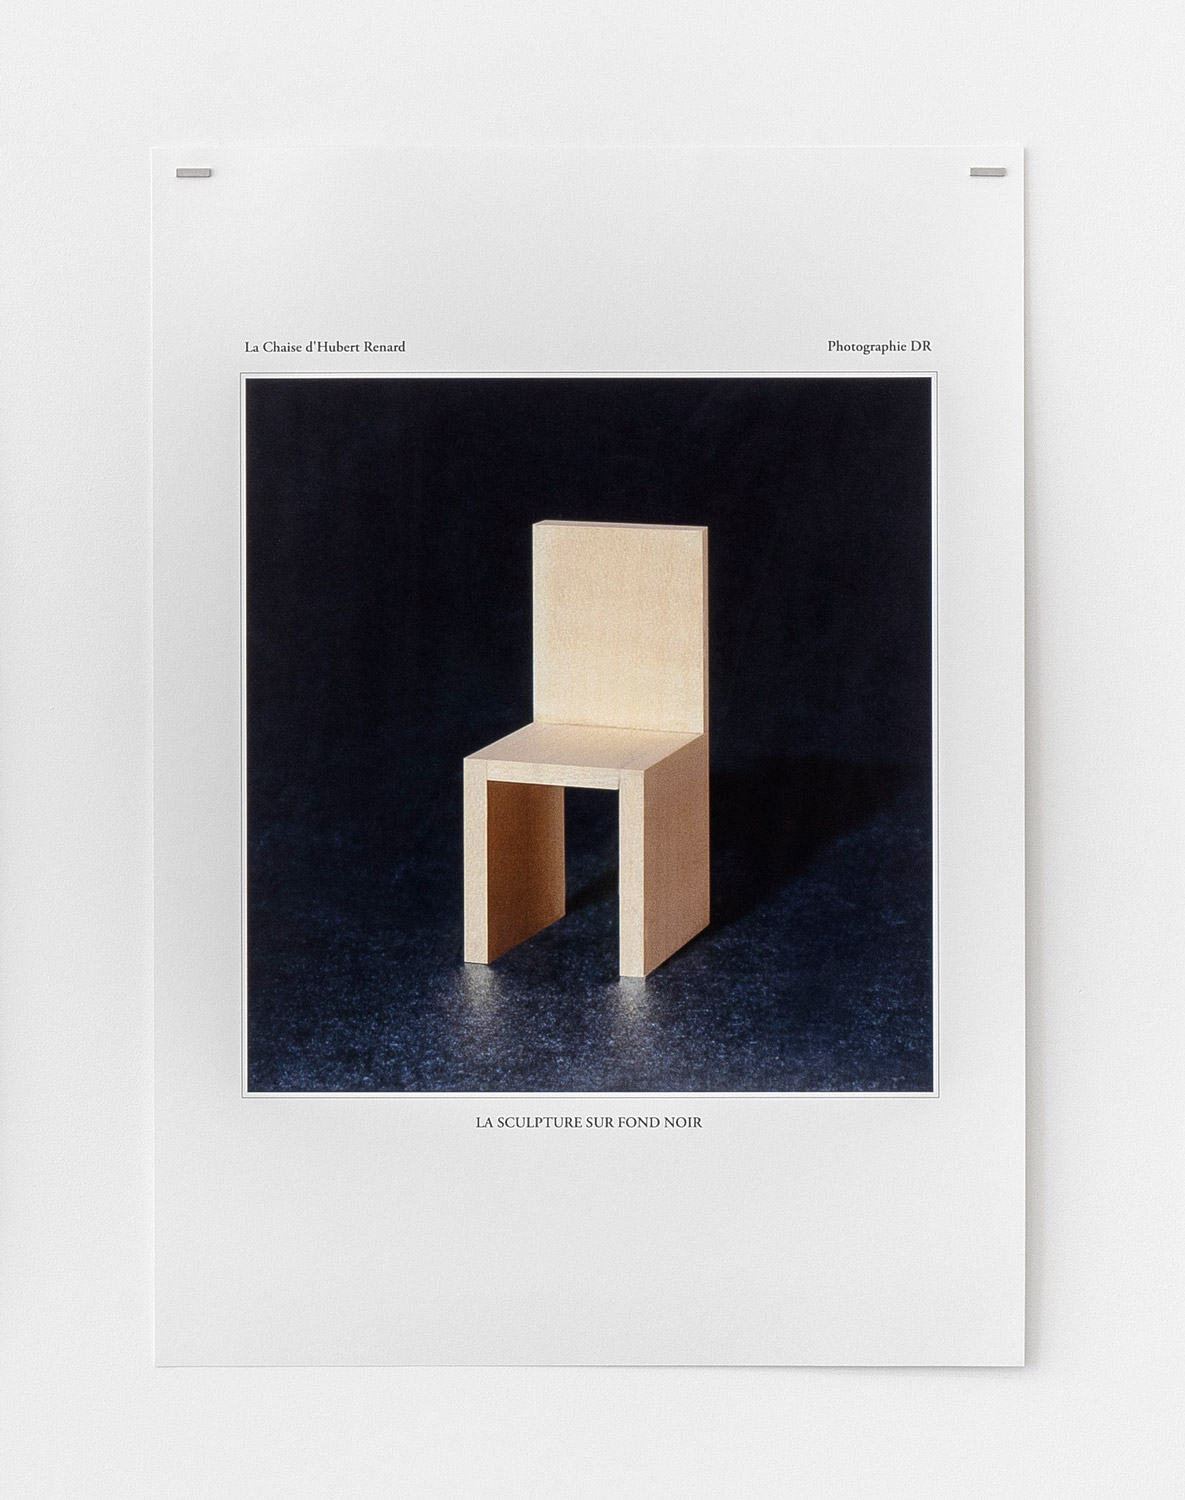 Hubert Renard - La Chaise d'Hubert Renard : la sculpture sur fond noir, 2020